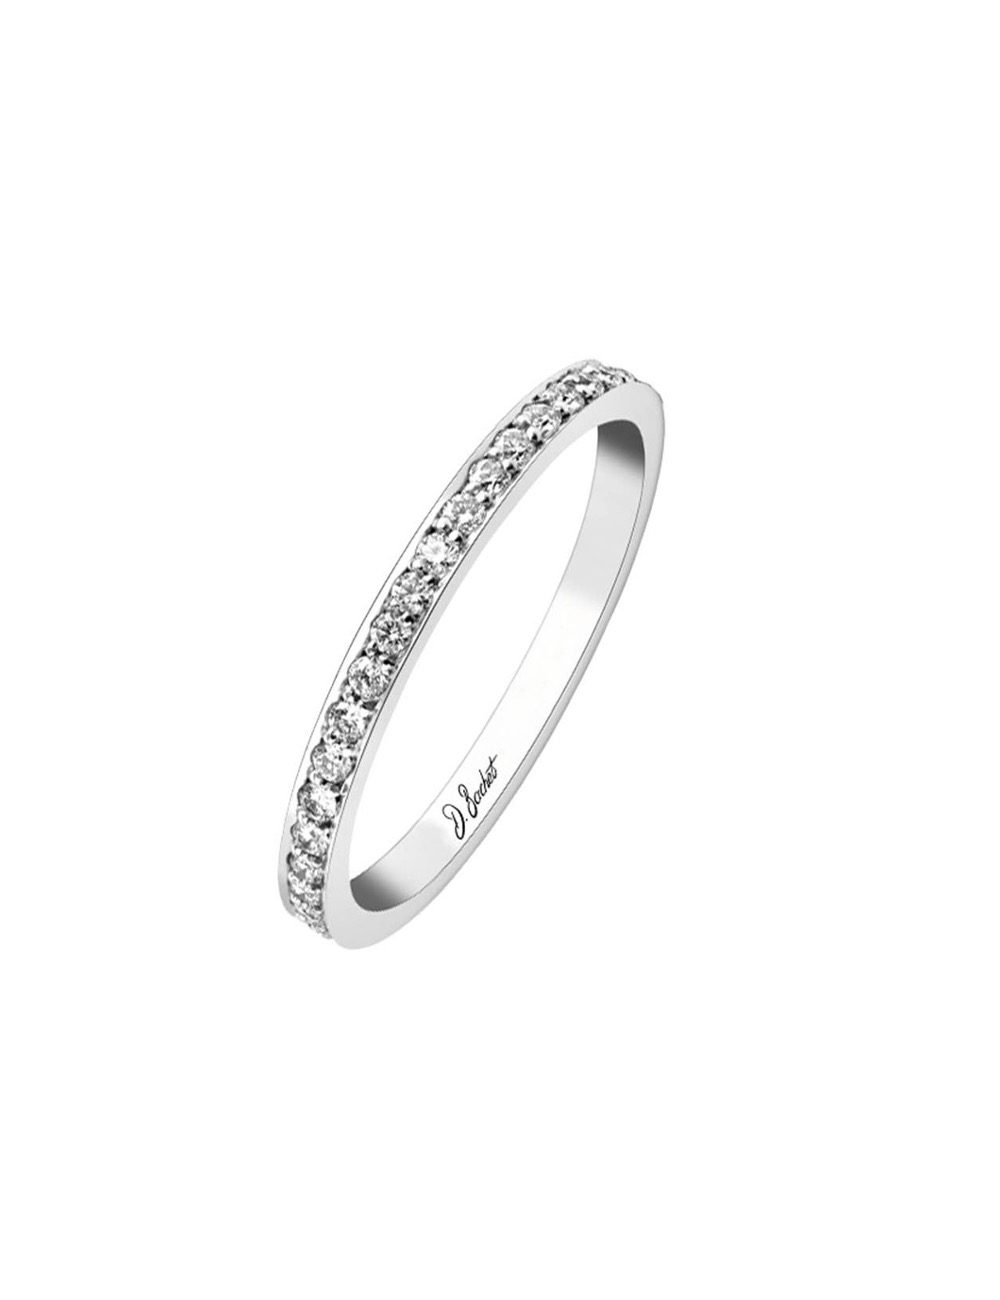 Women's eternity wedding band set with white diamonds, in platinum, customizable, Kimberley Process compliant